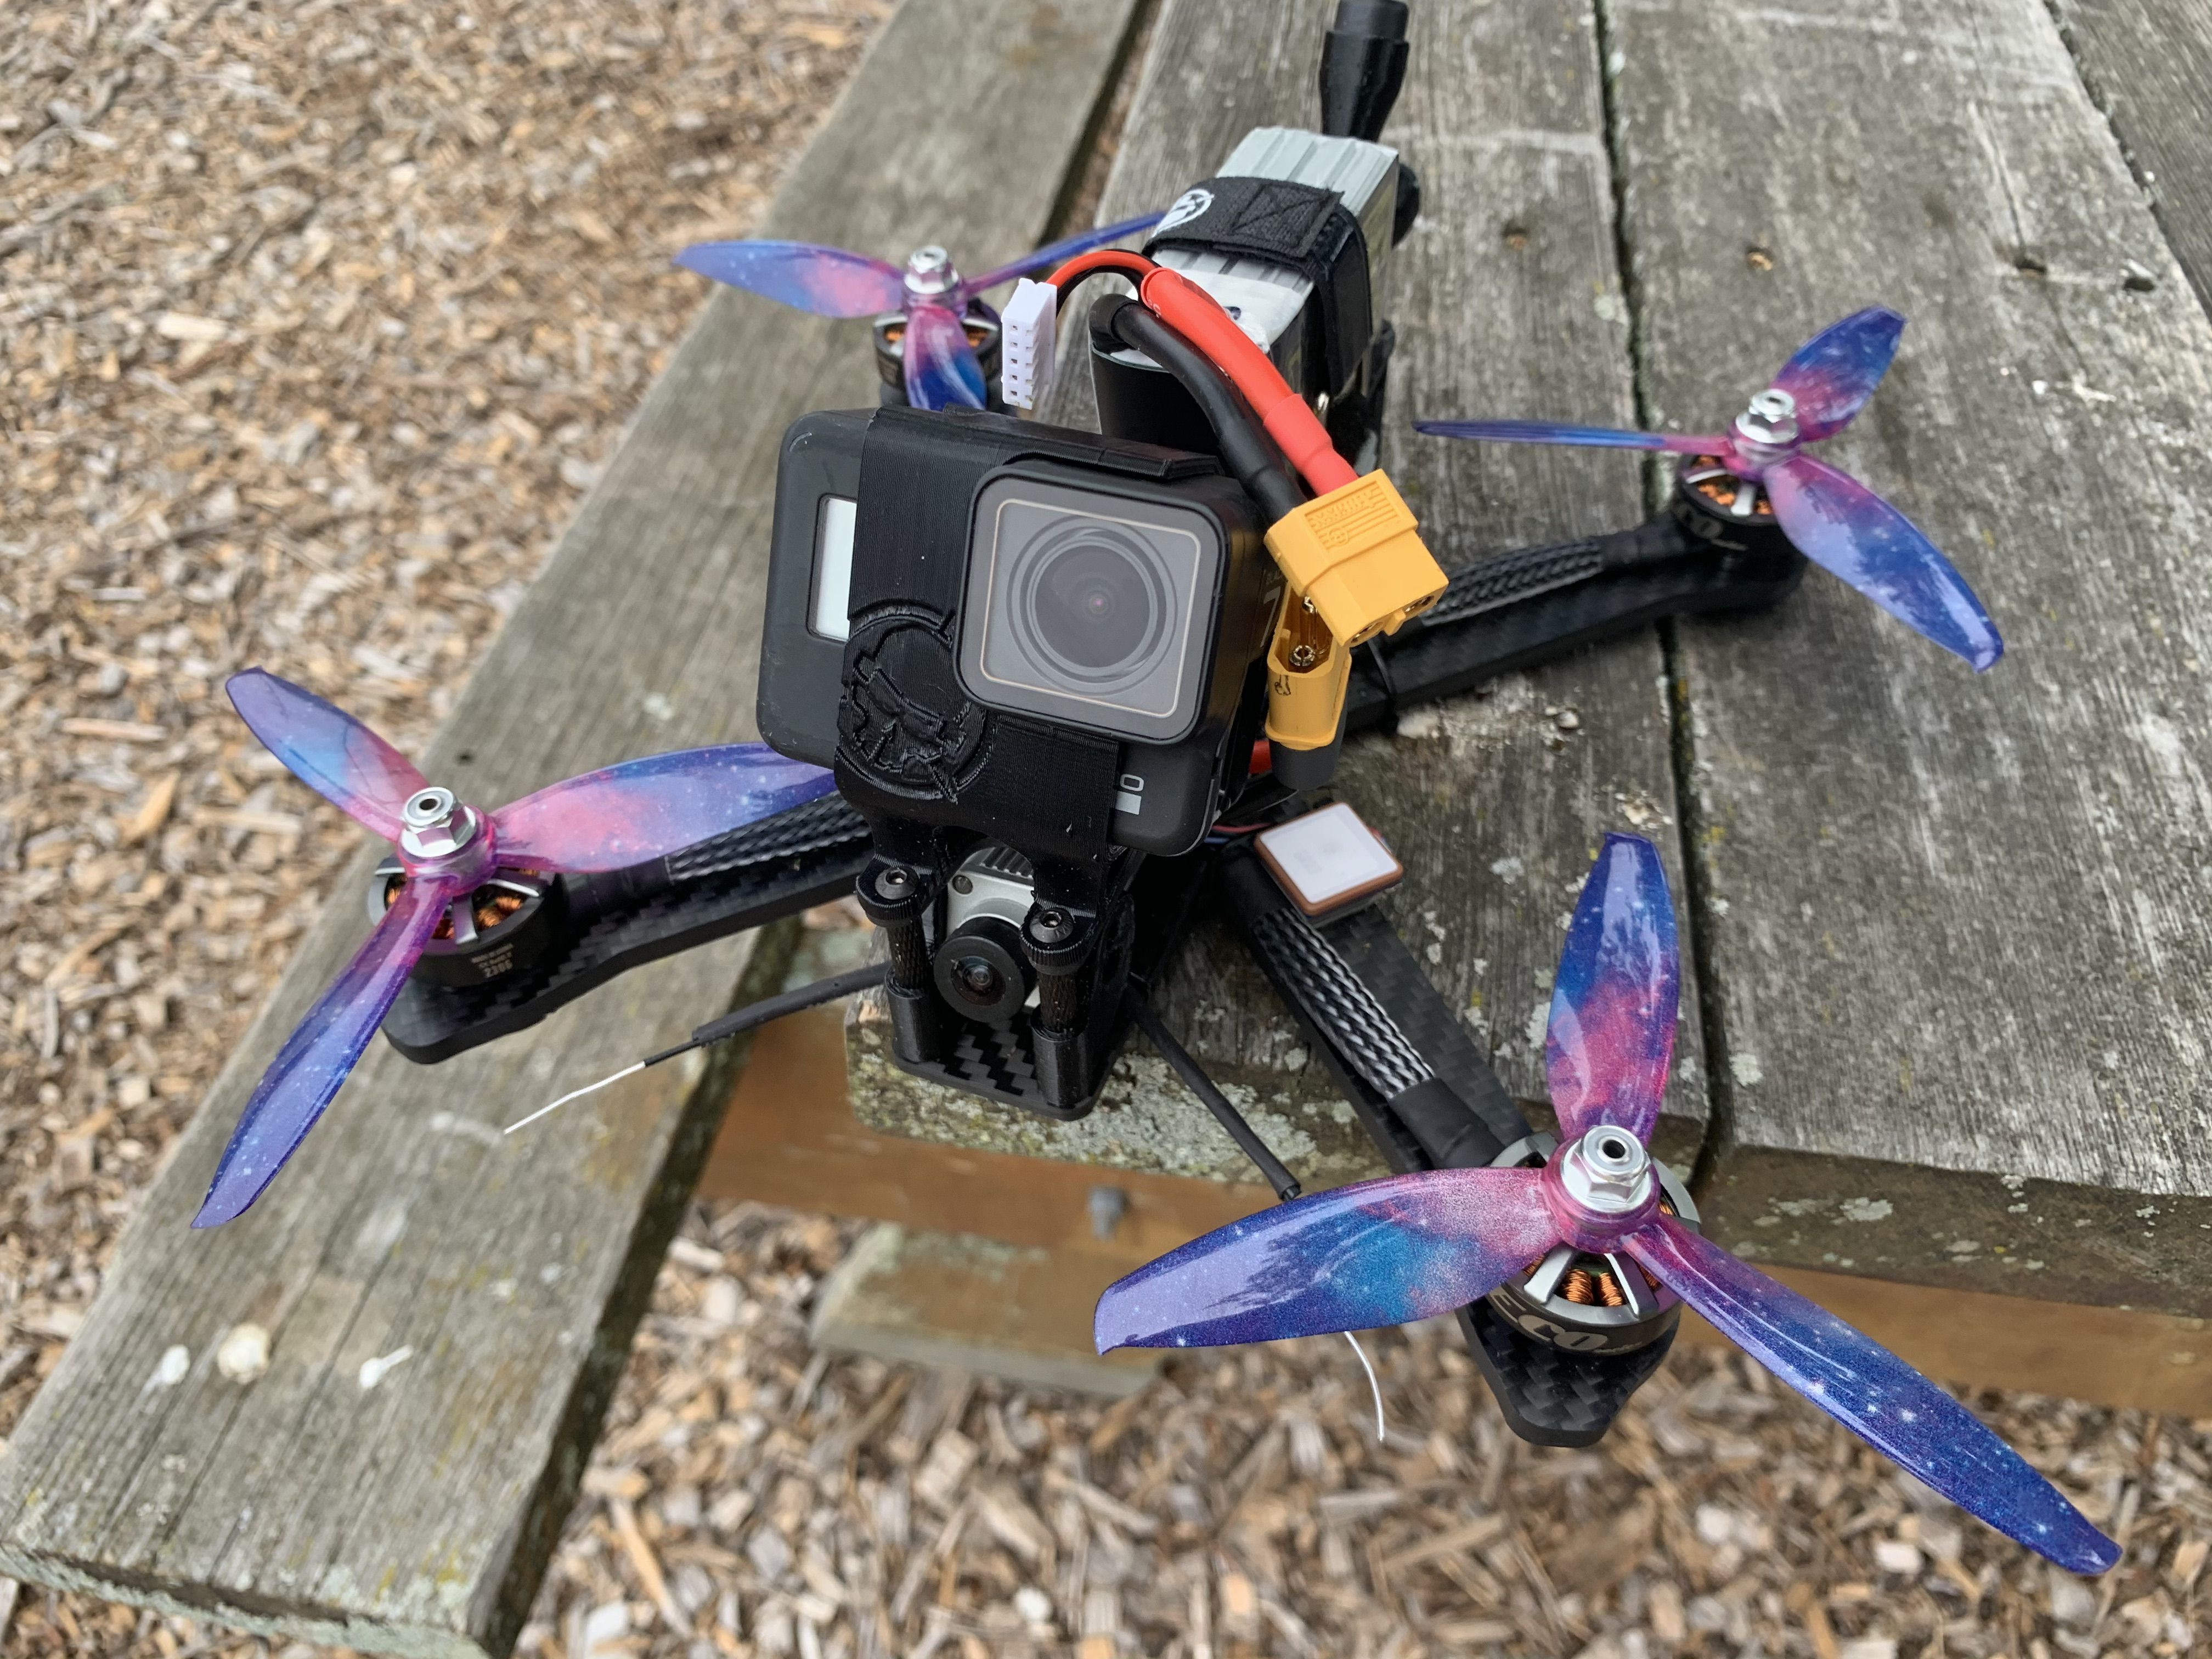 Rotor Riot : le Dremel drone - Helicomicro